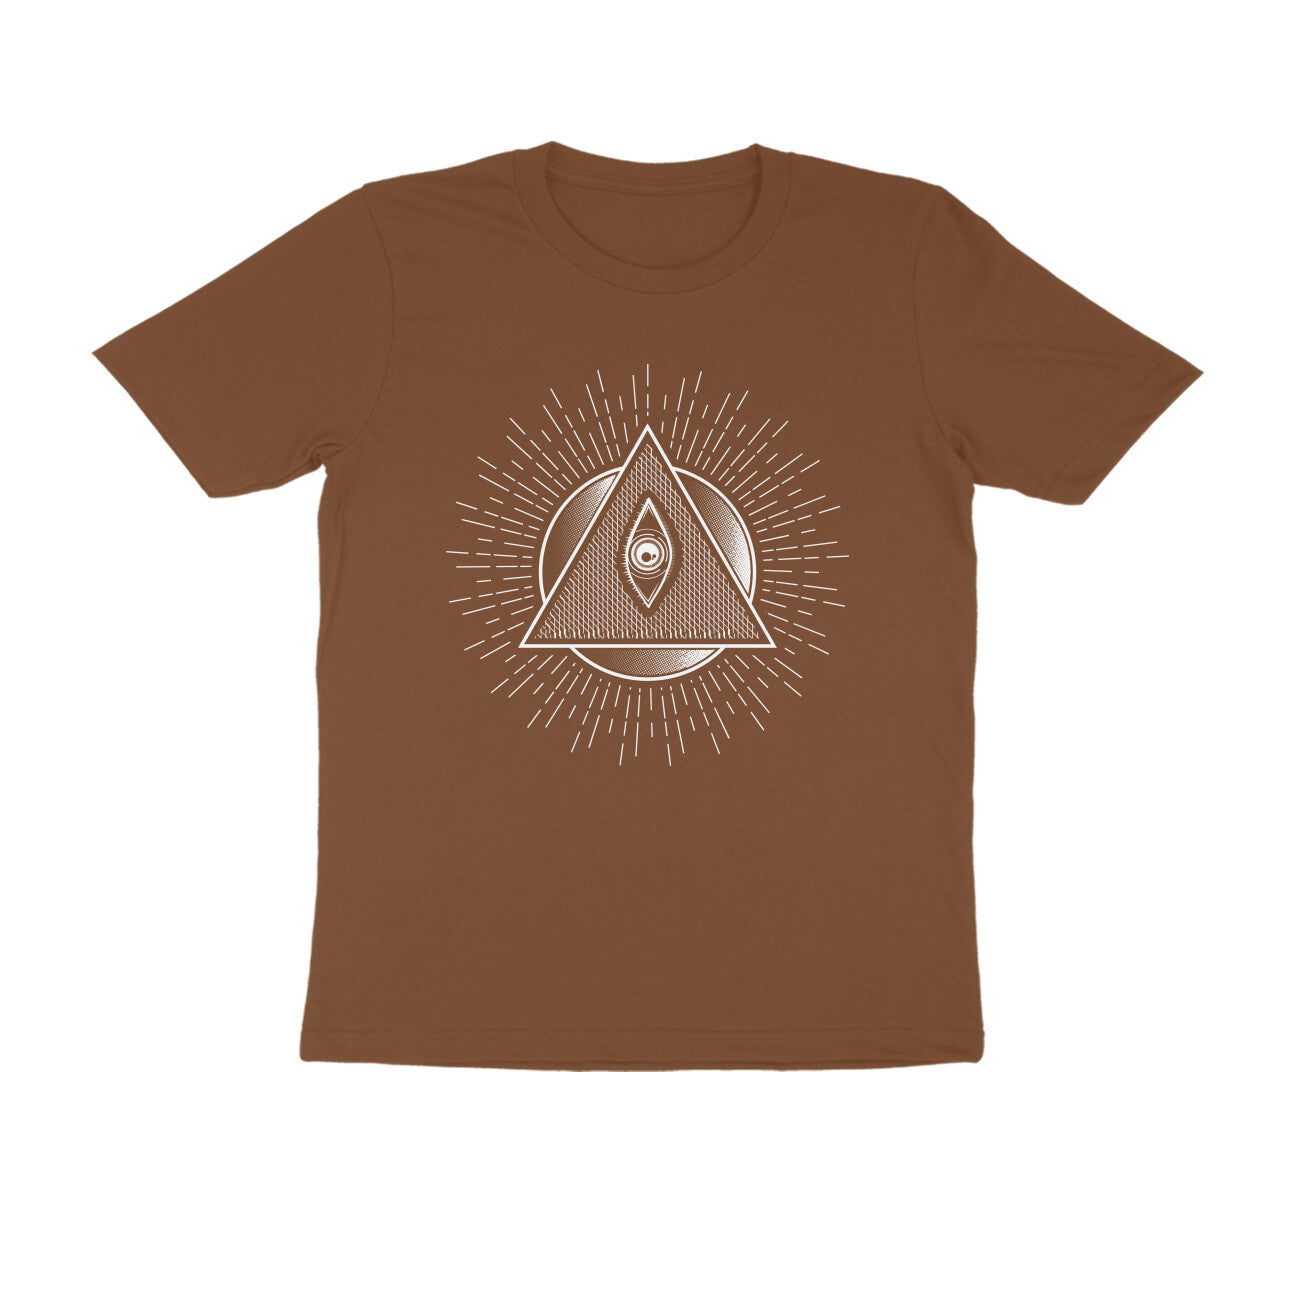 Black Gothic Mystic T-shirt Design With All Seeing Eye - Men's Half Sleeve T-Shirt